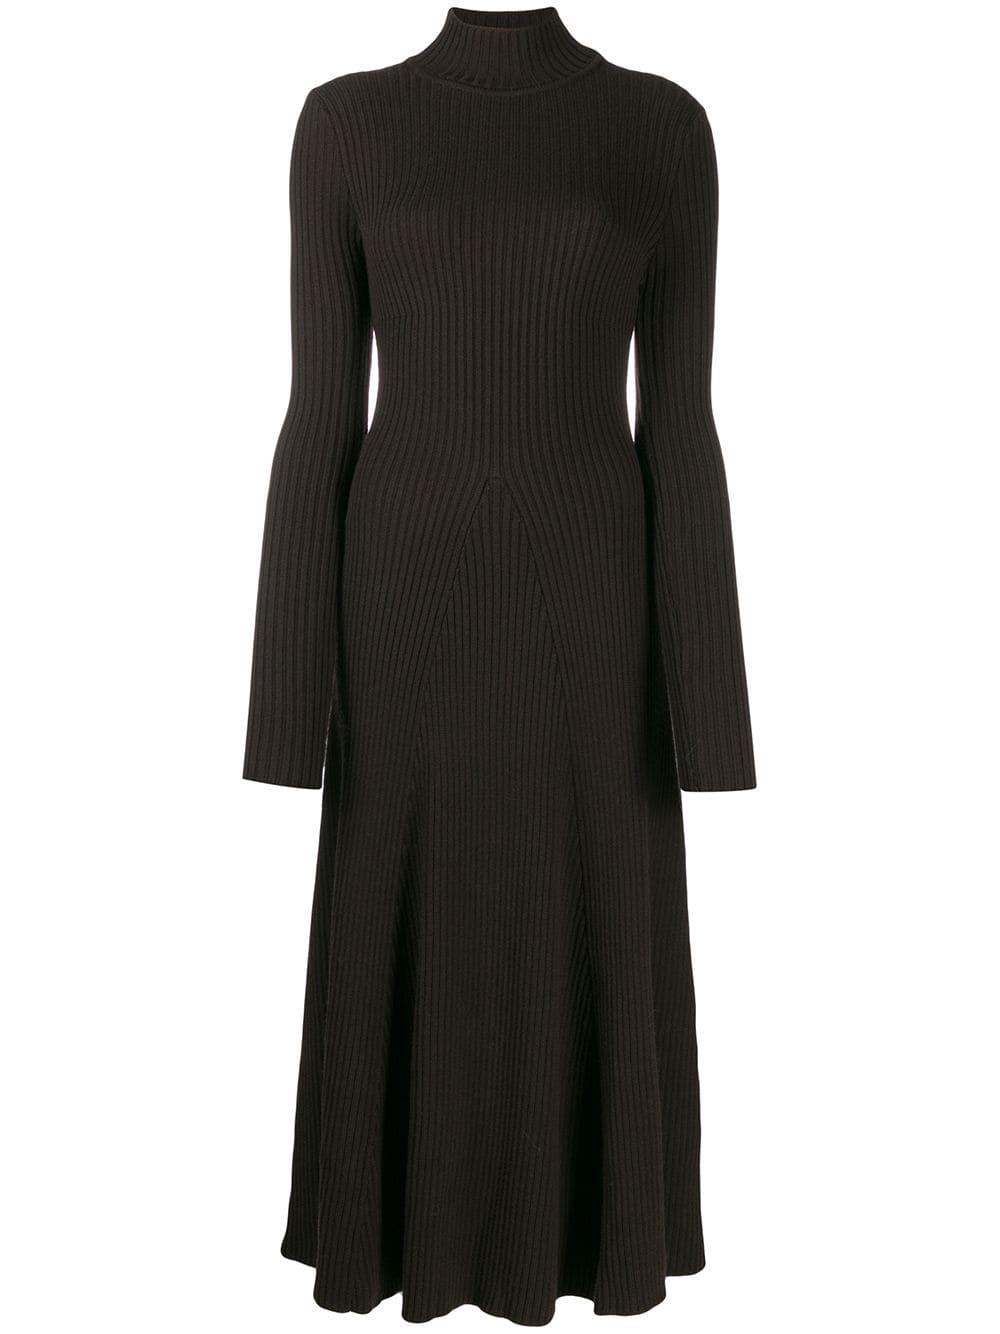 Erika Cavallini Semi Couture Wool Ribbed Knit Midi Dress in Brown - Lyst